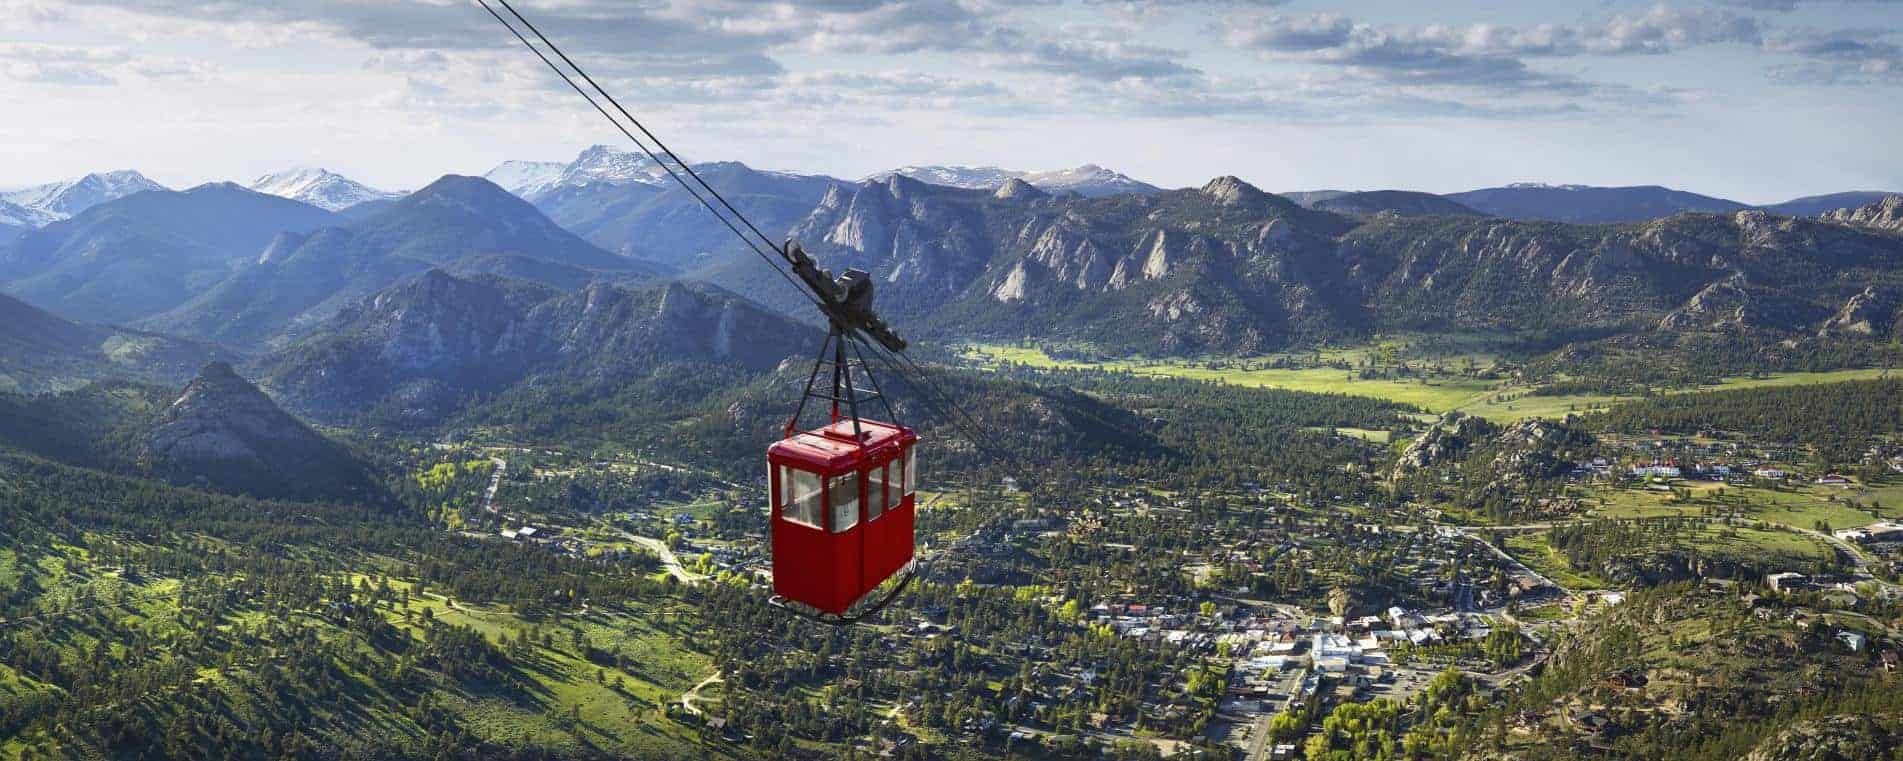 Estes Park Aerial Tram Offers an Exciting Adventure